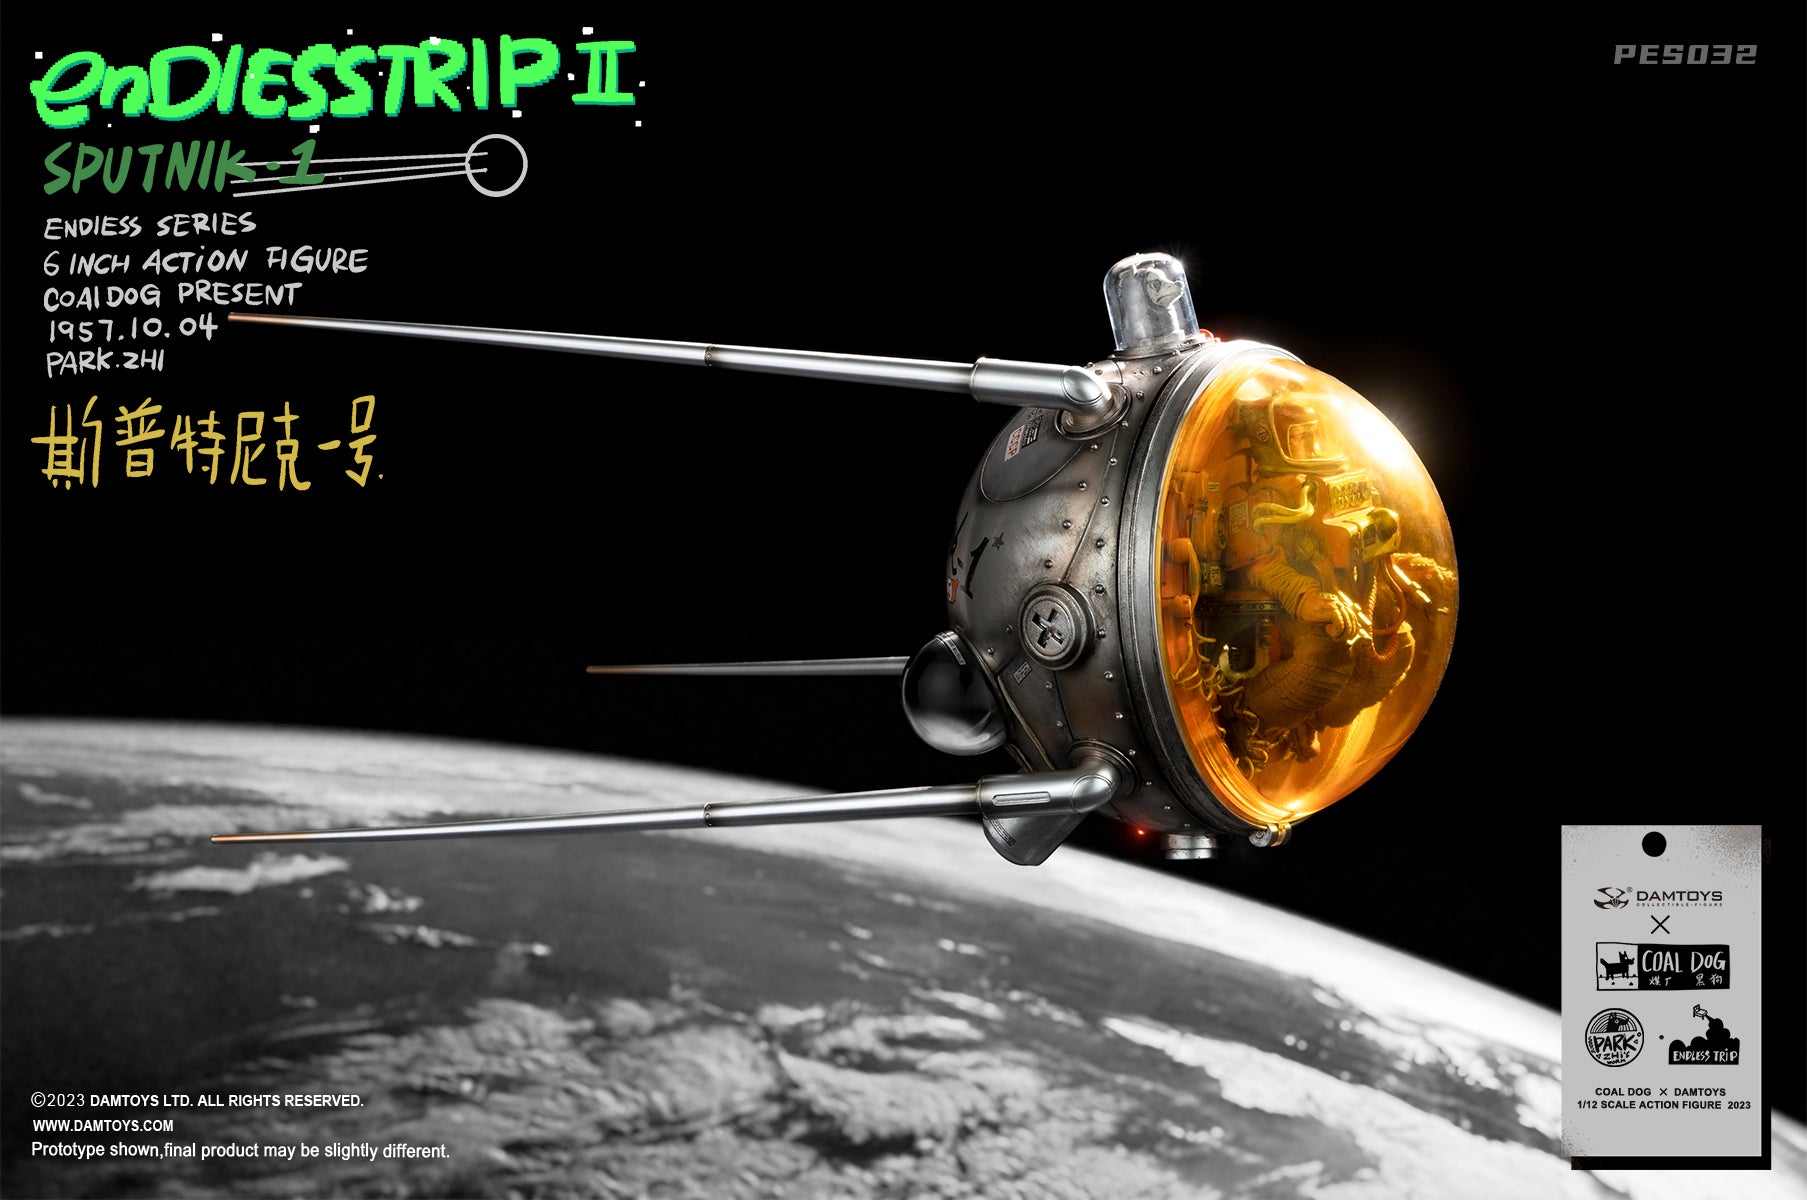 Endless Trip II: Sputnik 1: PES032: DamToys x Coaldog (1/12) Twelfth Scale Damtoys